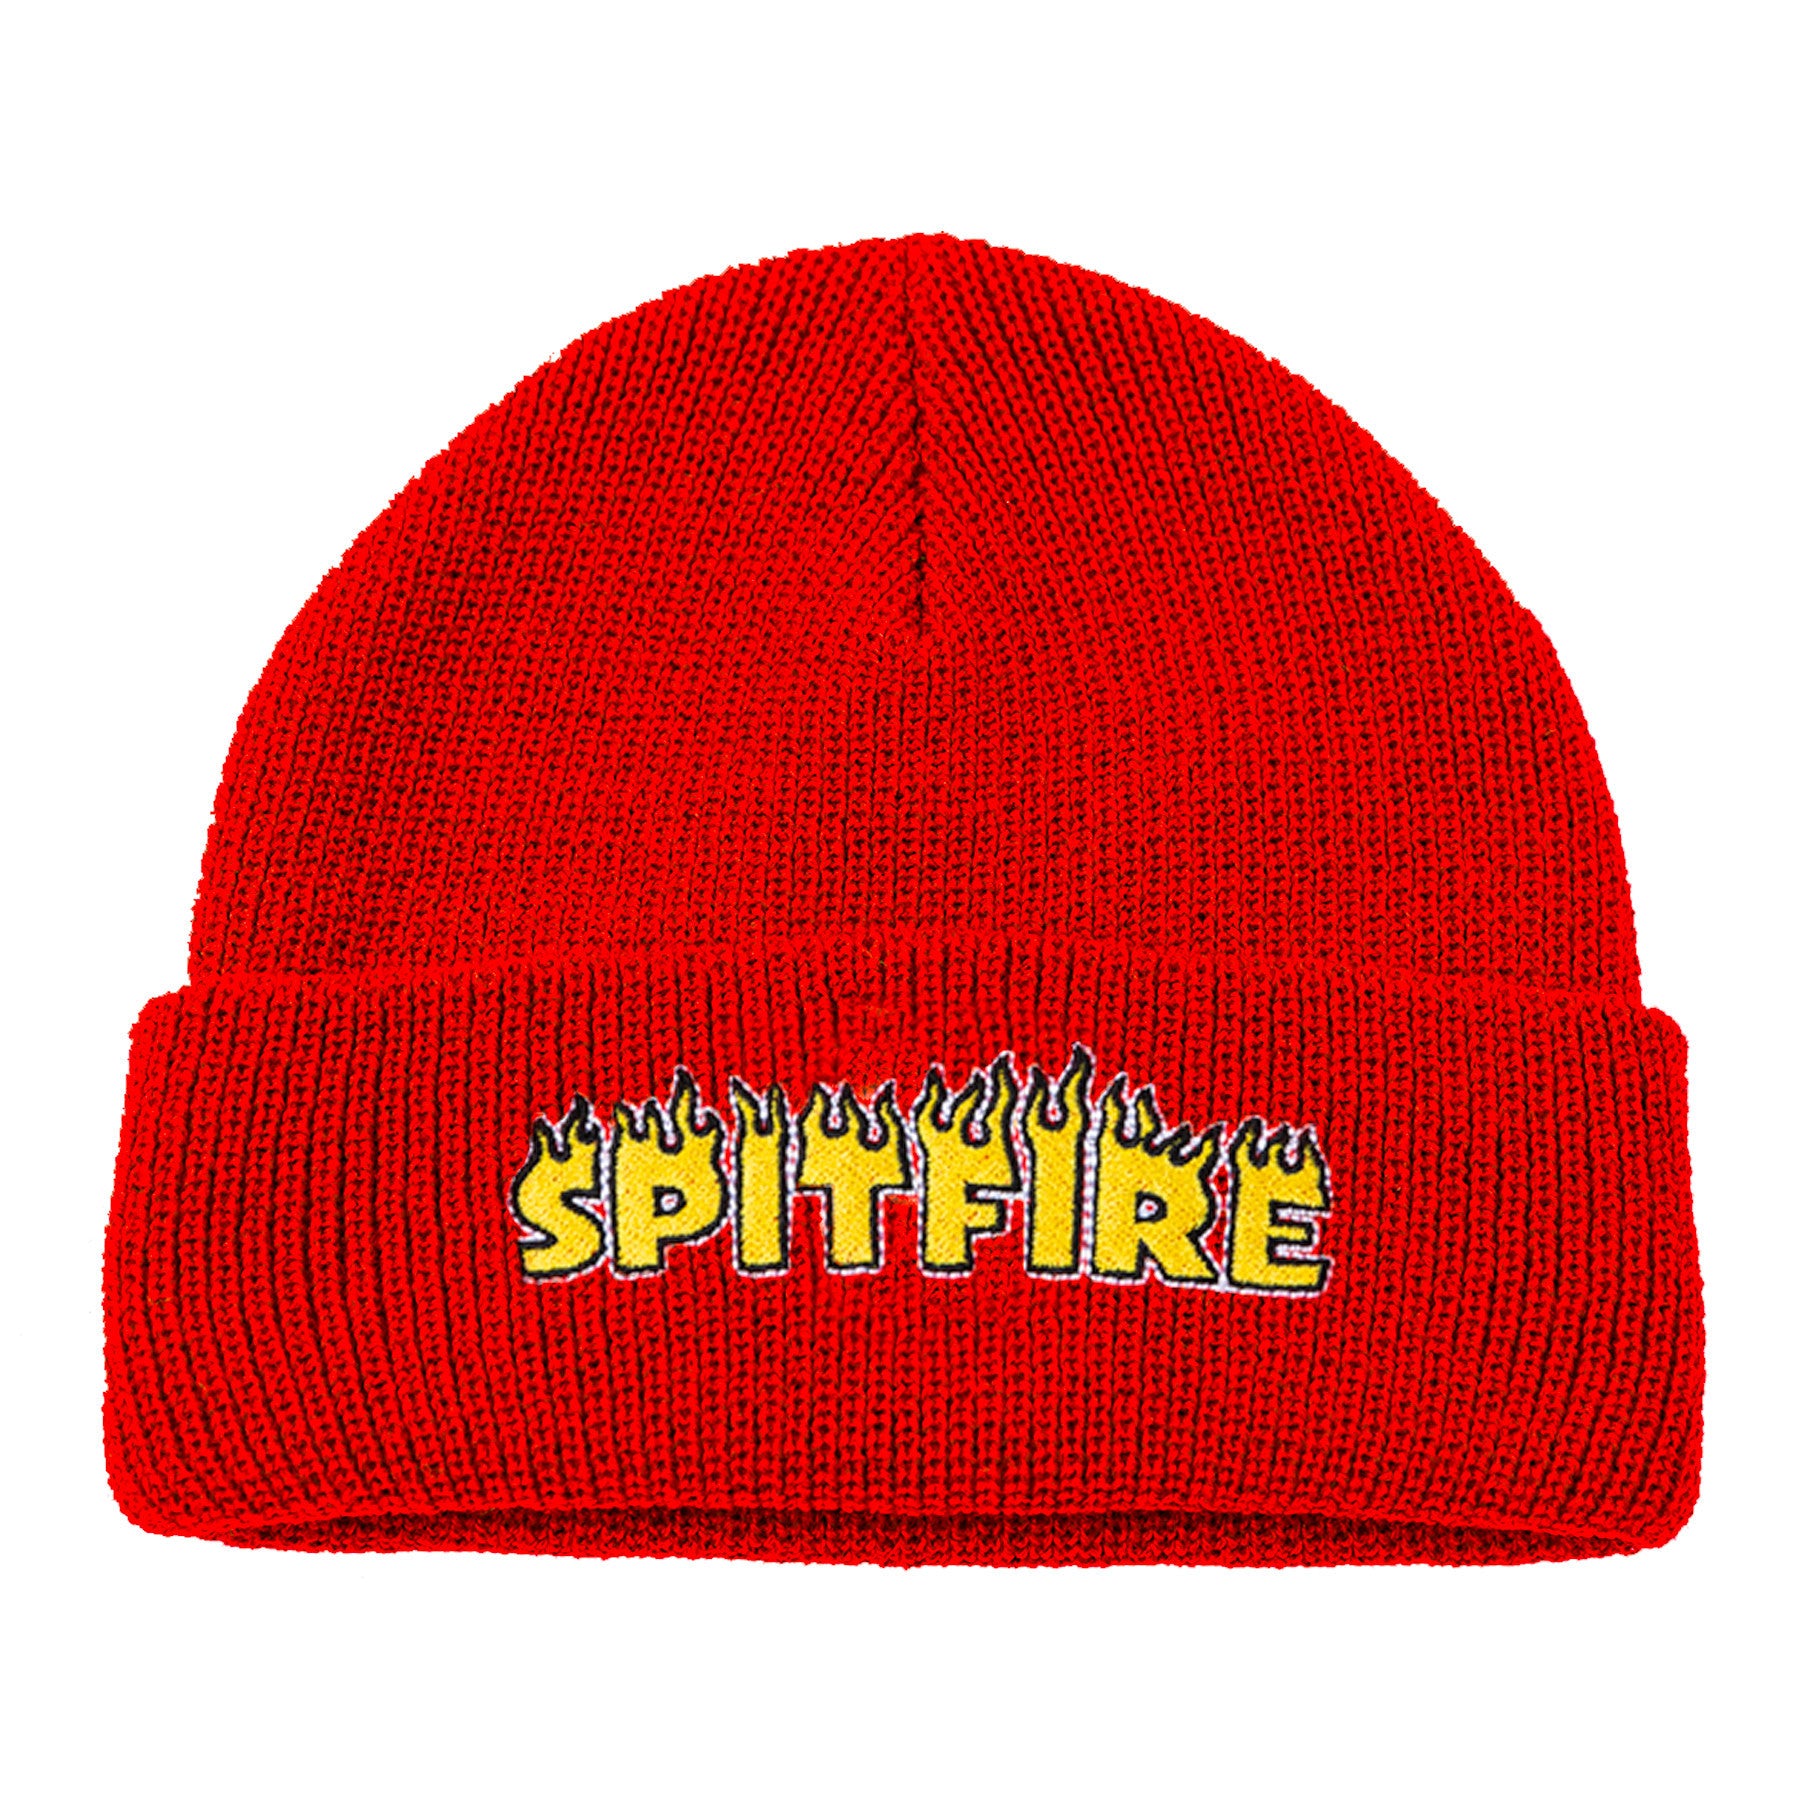 Red Flashfire Spitfire Cuff Beanie